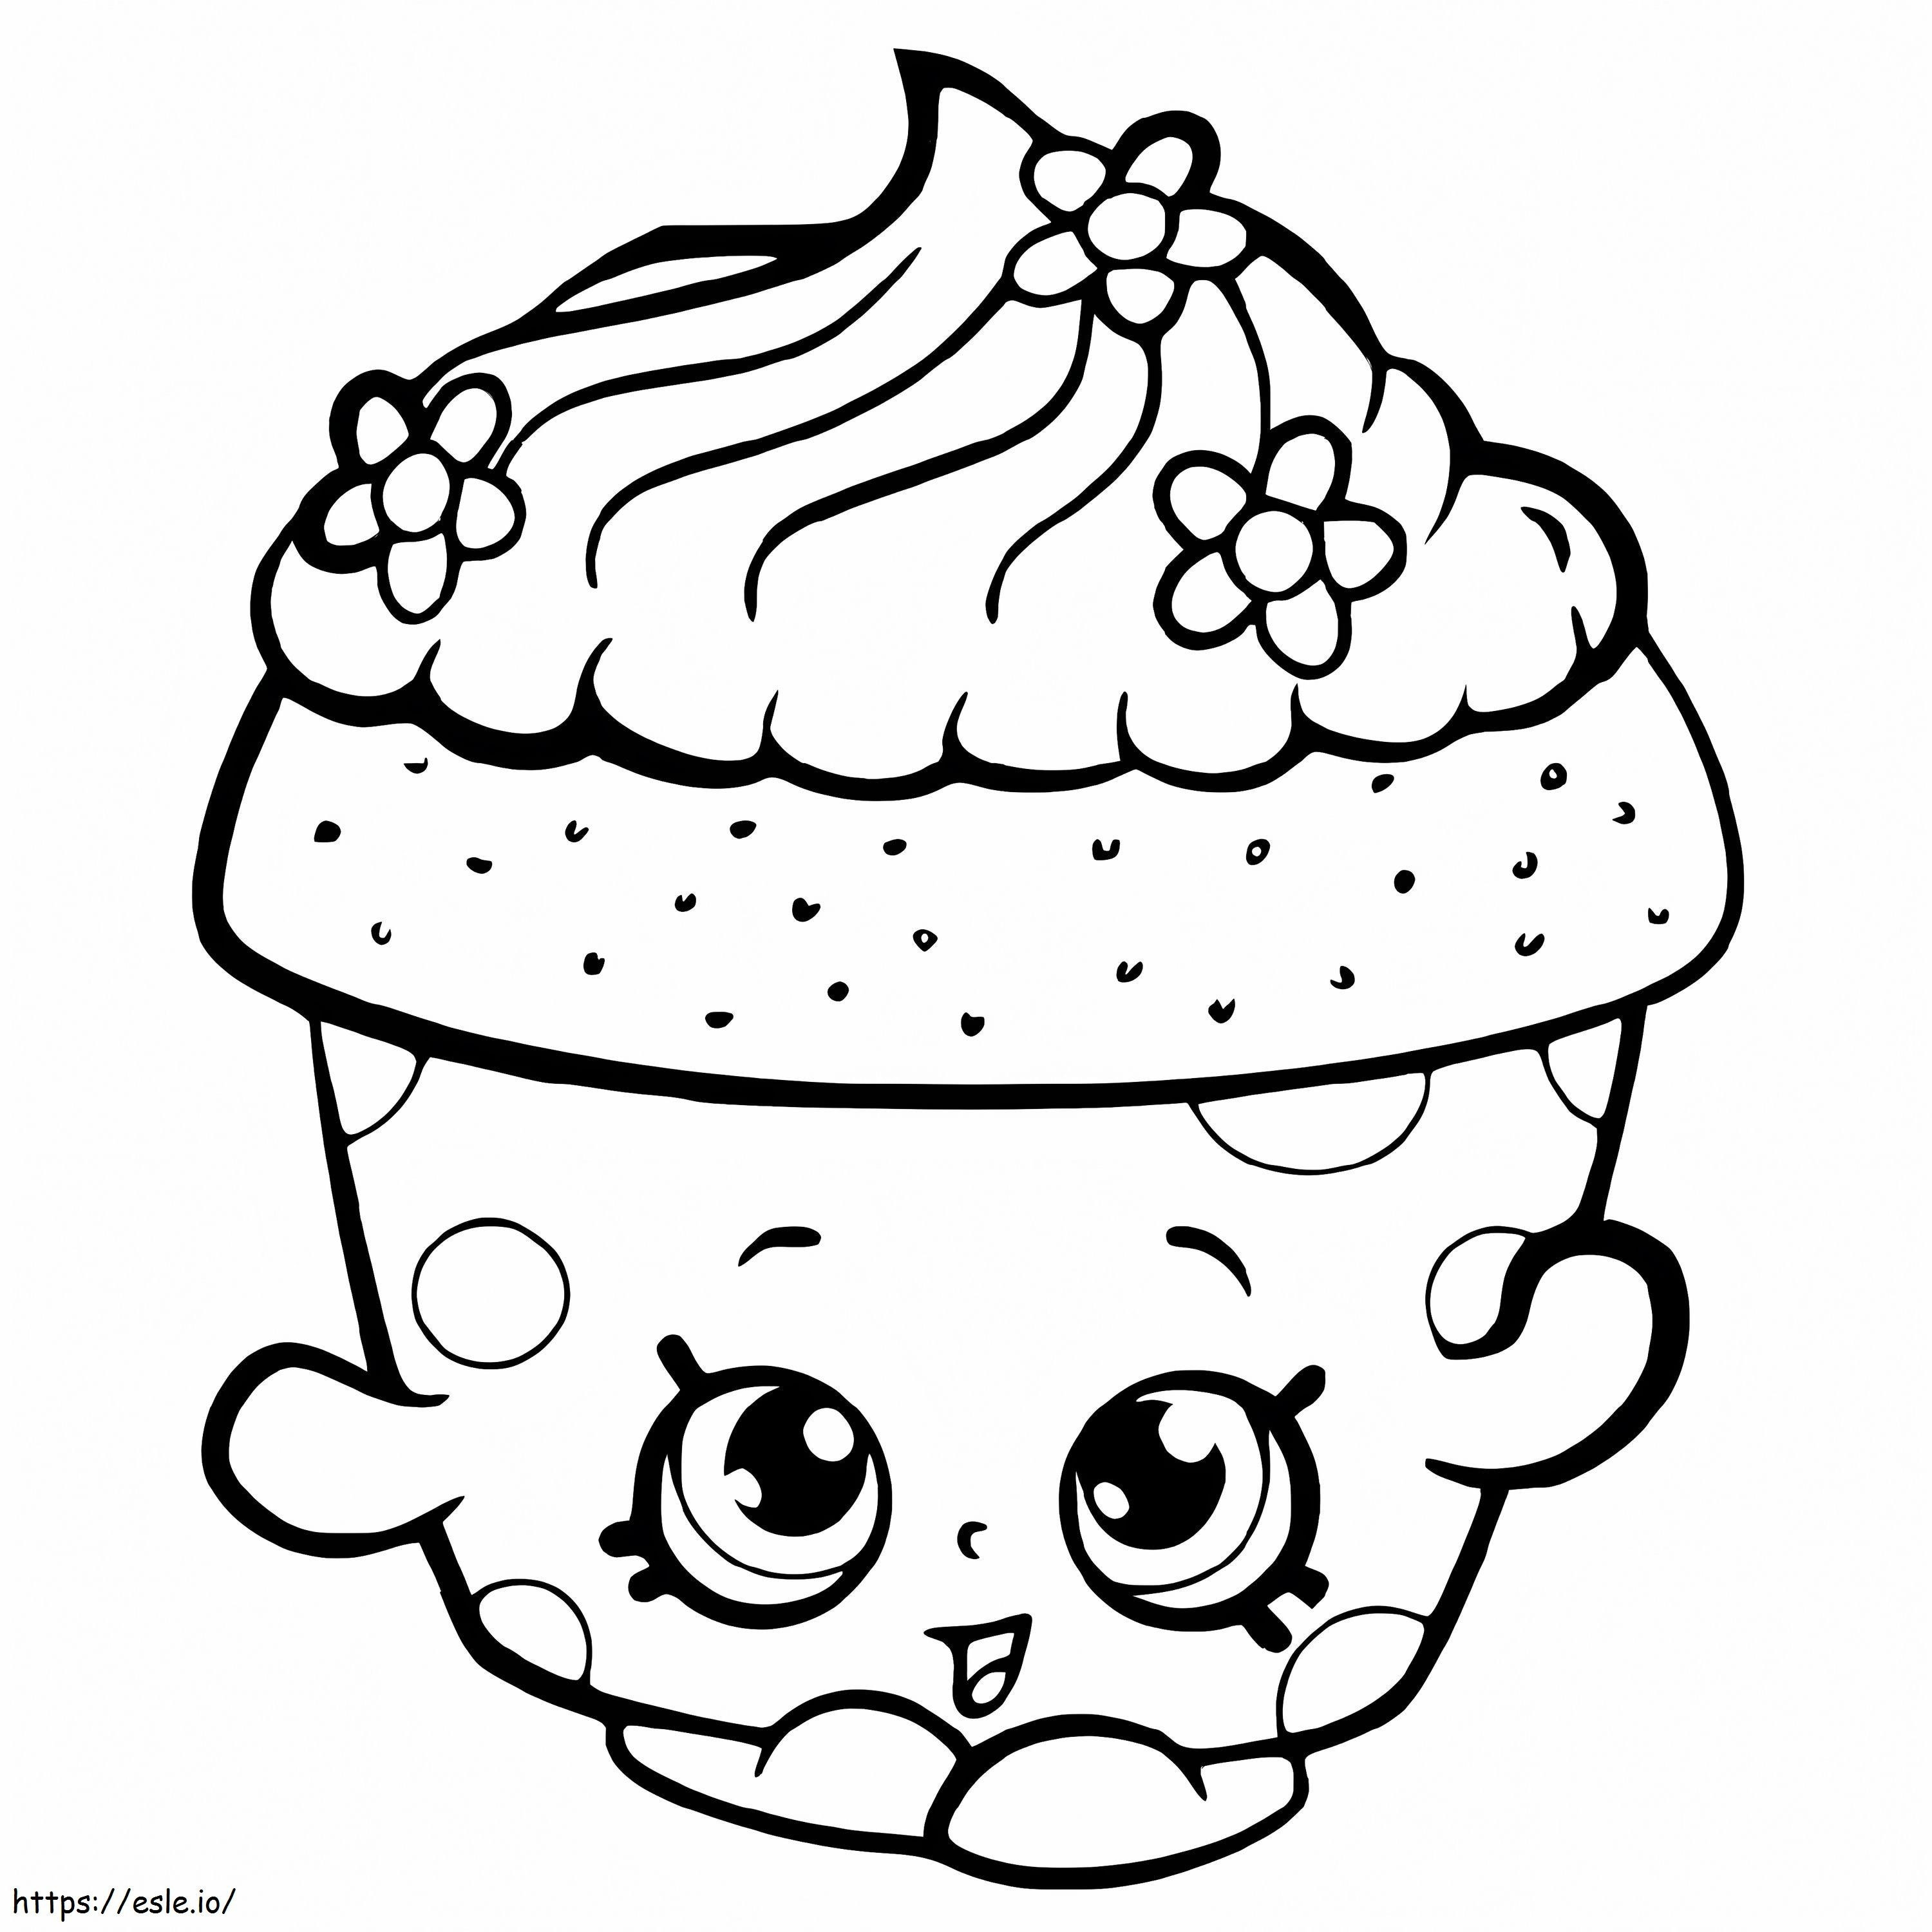 Cupcake Petalo Shopkin coloring page